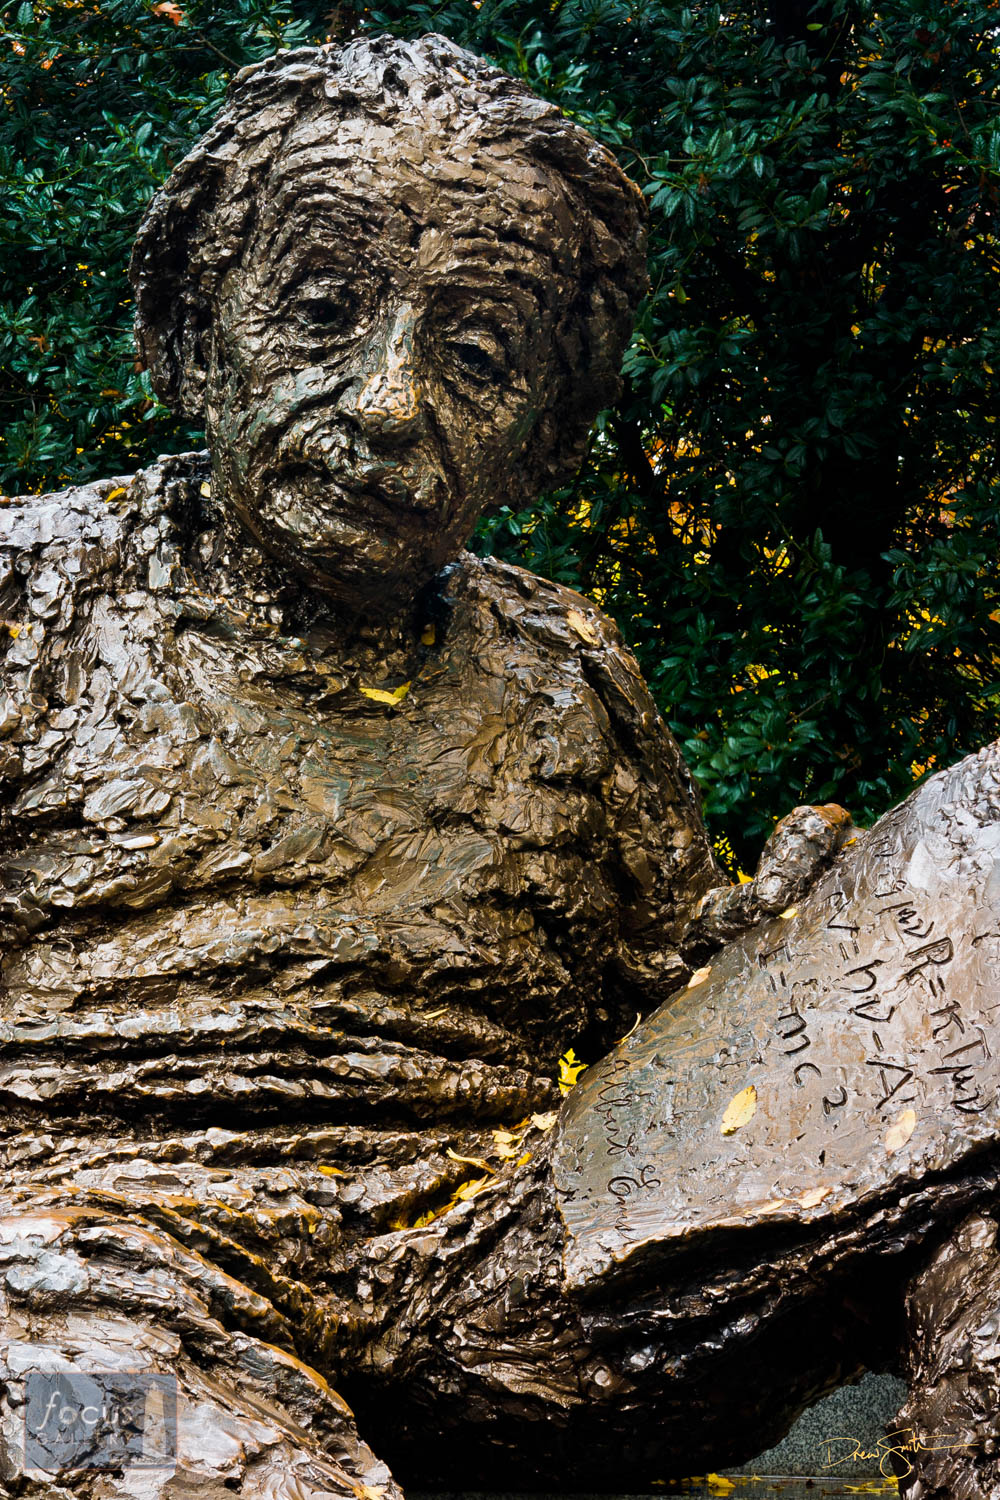 Photo © Drew Smith Albert Einstein memorial statue at the National Academy of Sciences